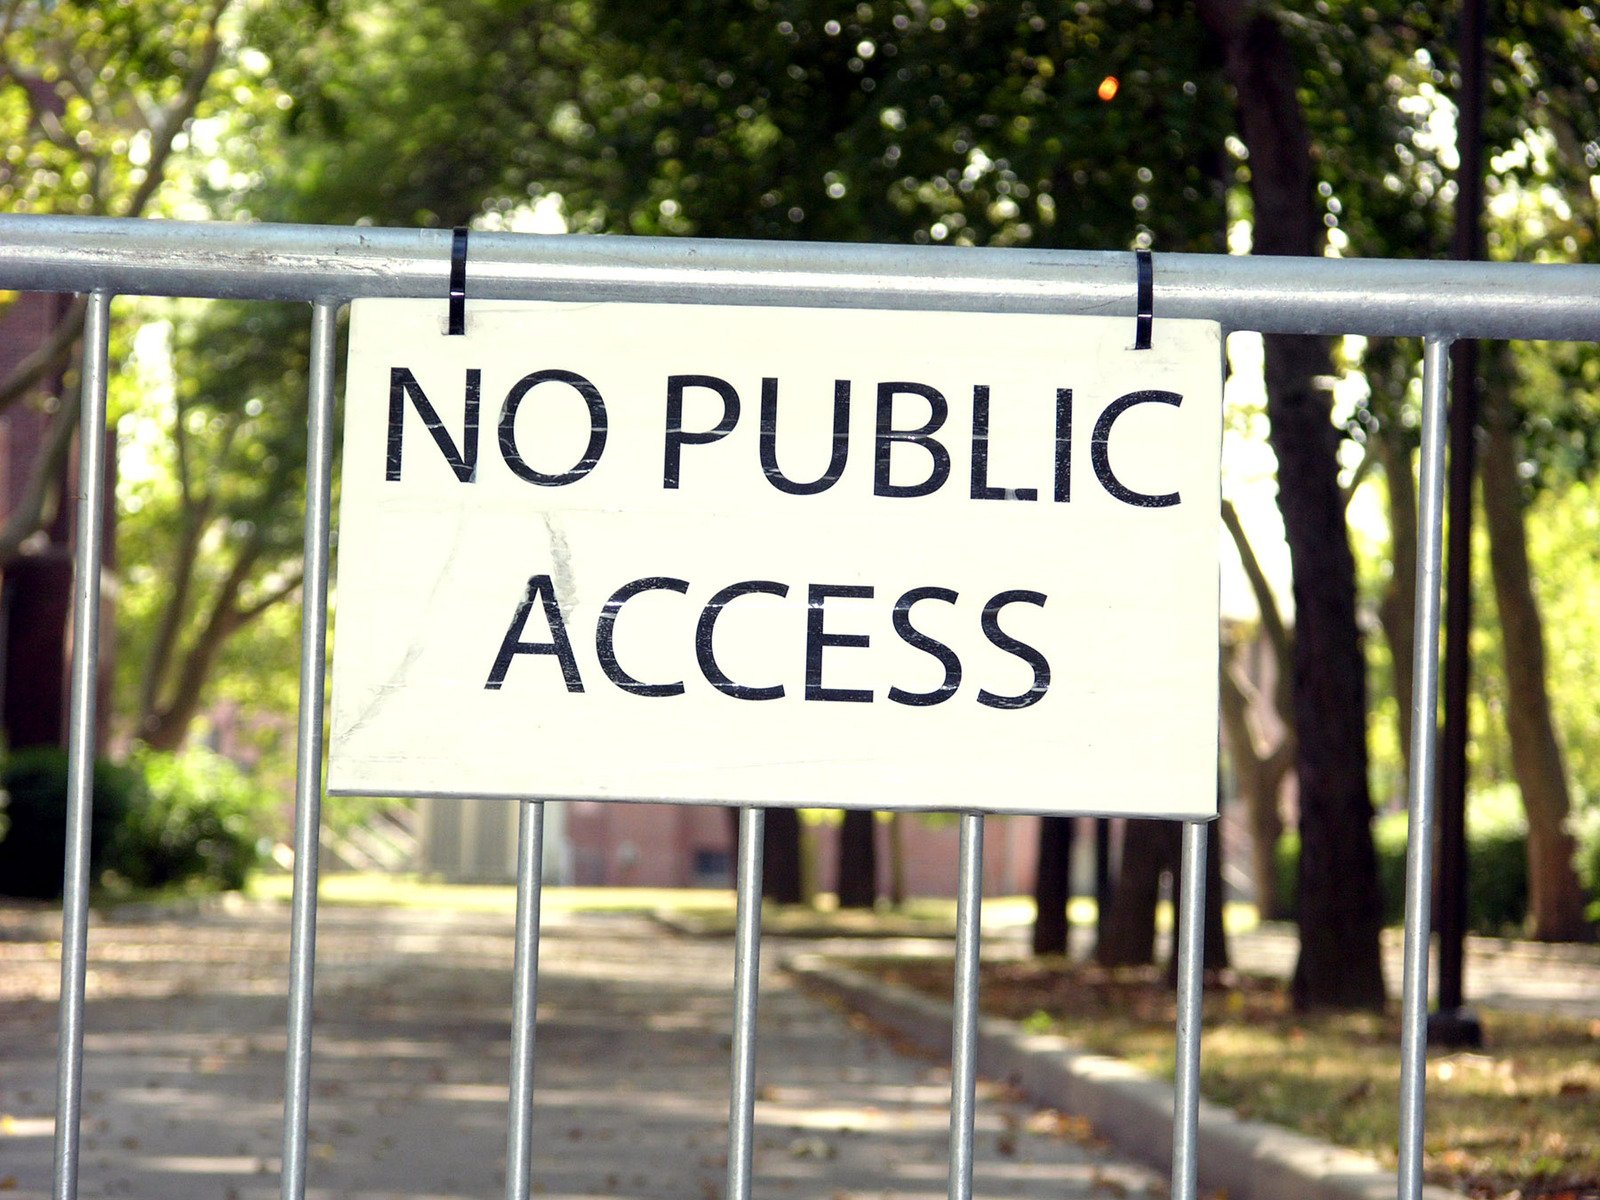 No public access